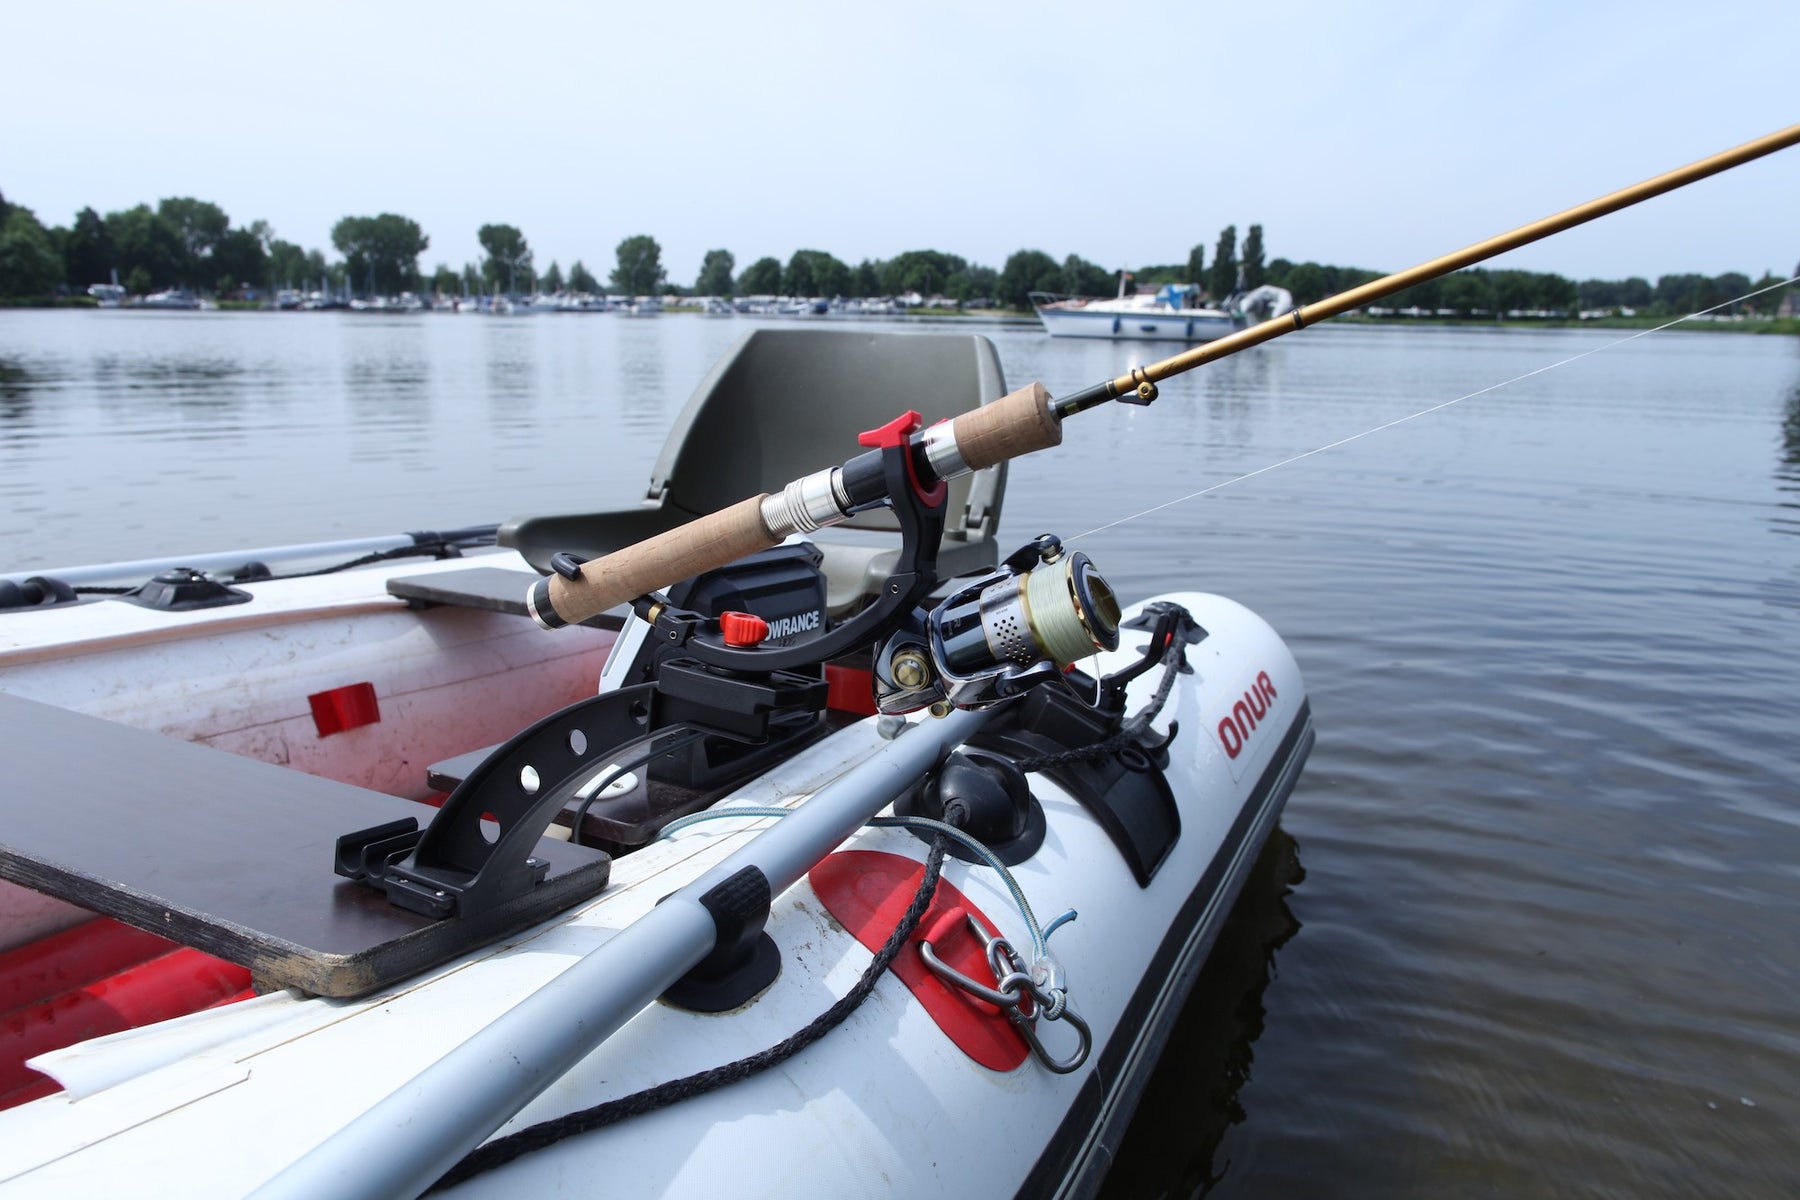 DAIICHISEIKO multifunctional portable boat fishing rod